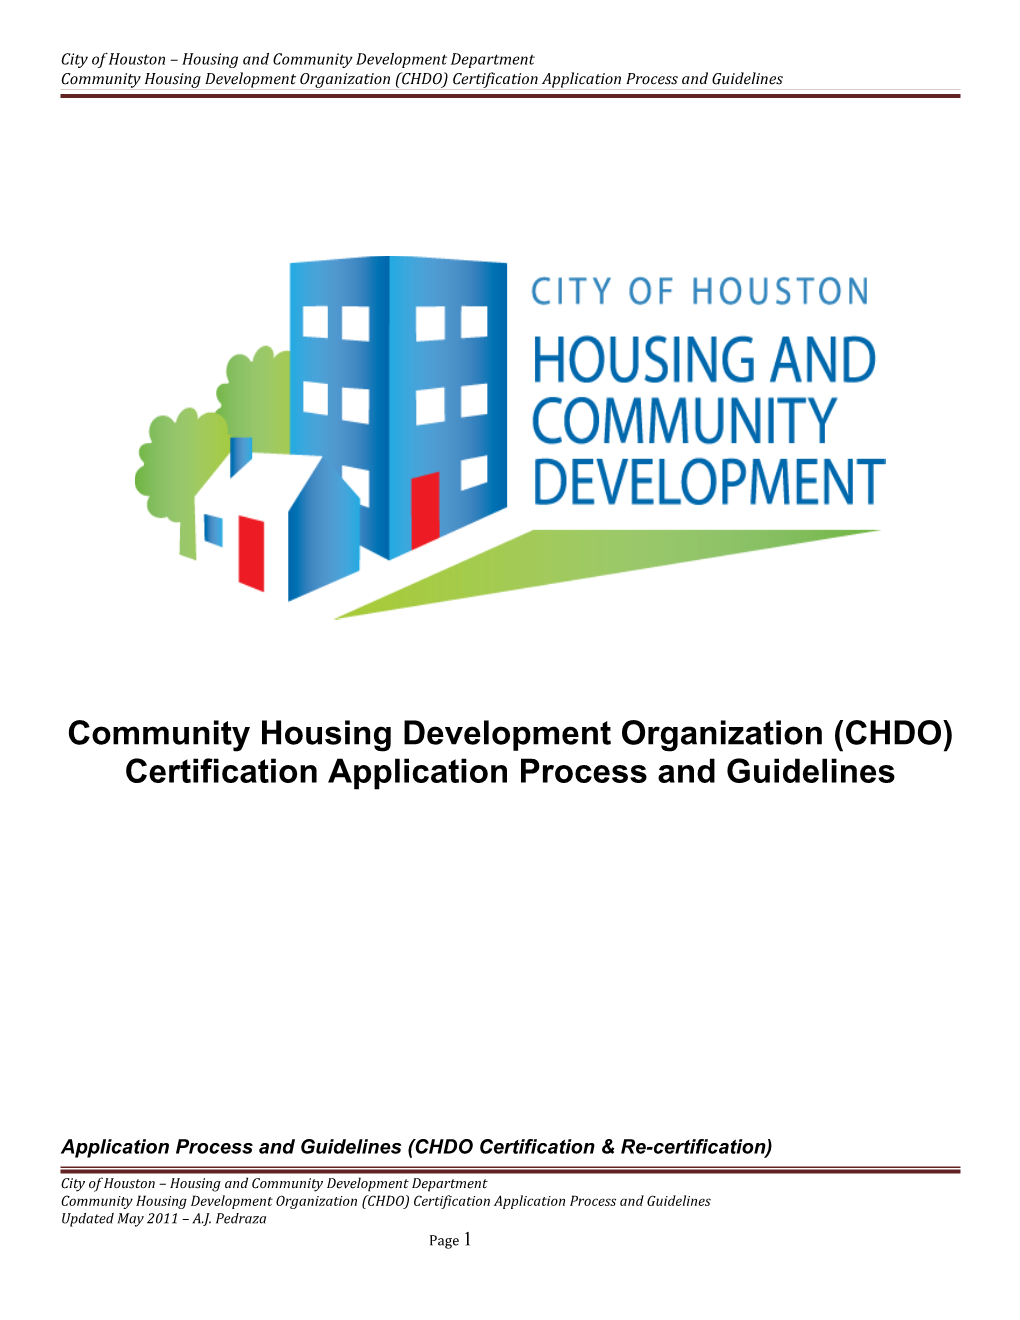 Community Housing Development Organization (CHDO) Certification Application Process And